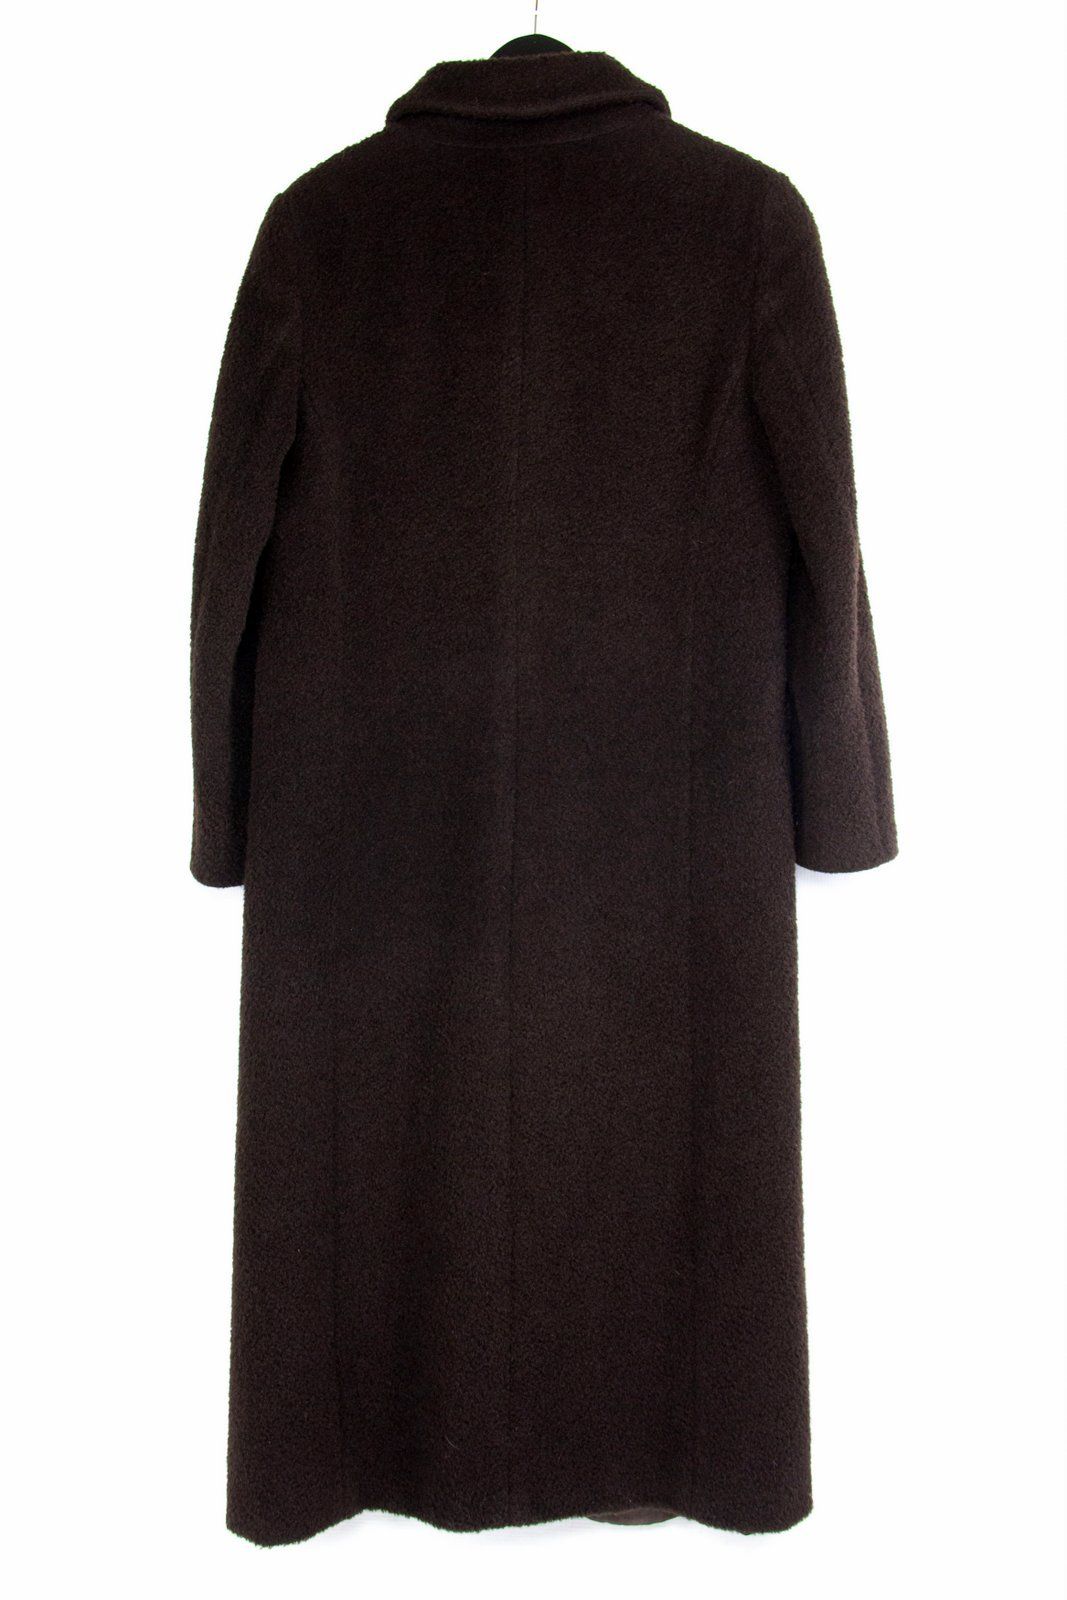 M.K. EMKAY women's Alpaca Wool Brown Long Coat, Size L, US 12 - second_first